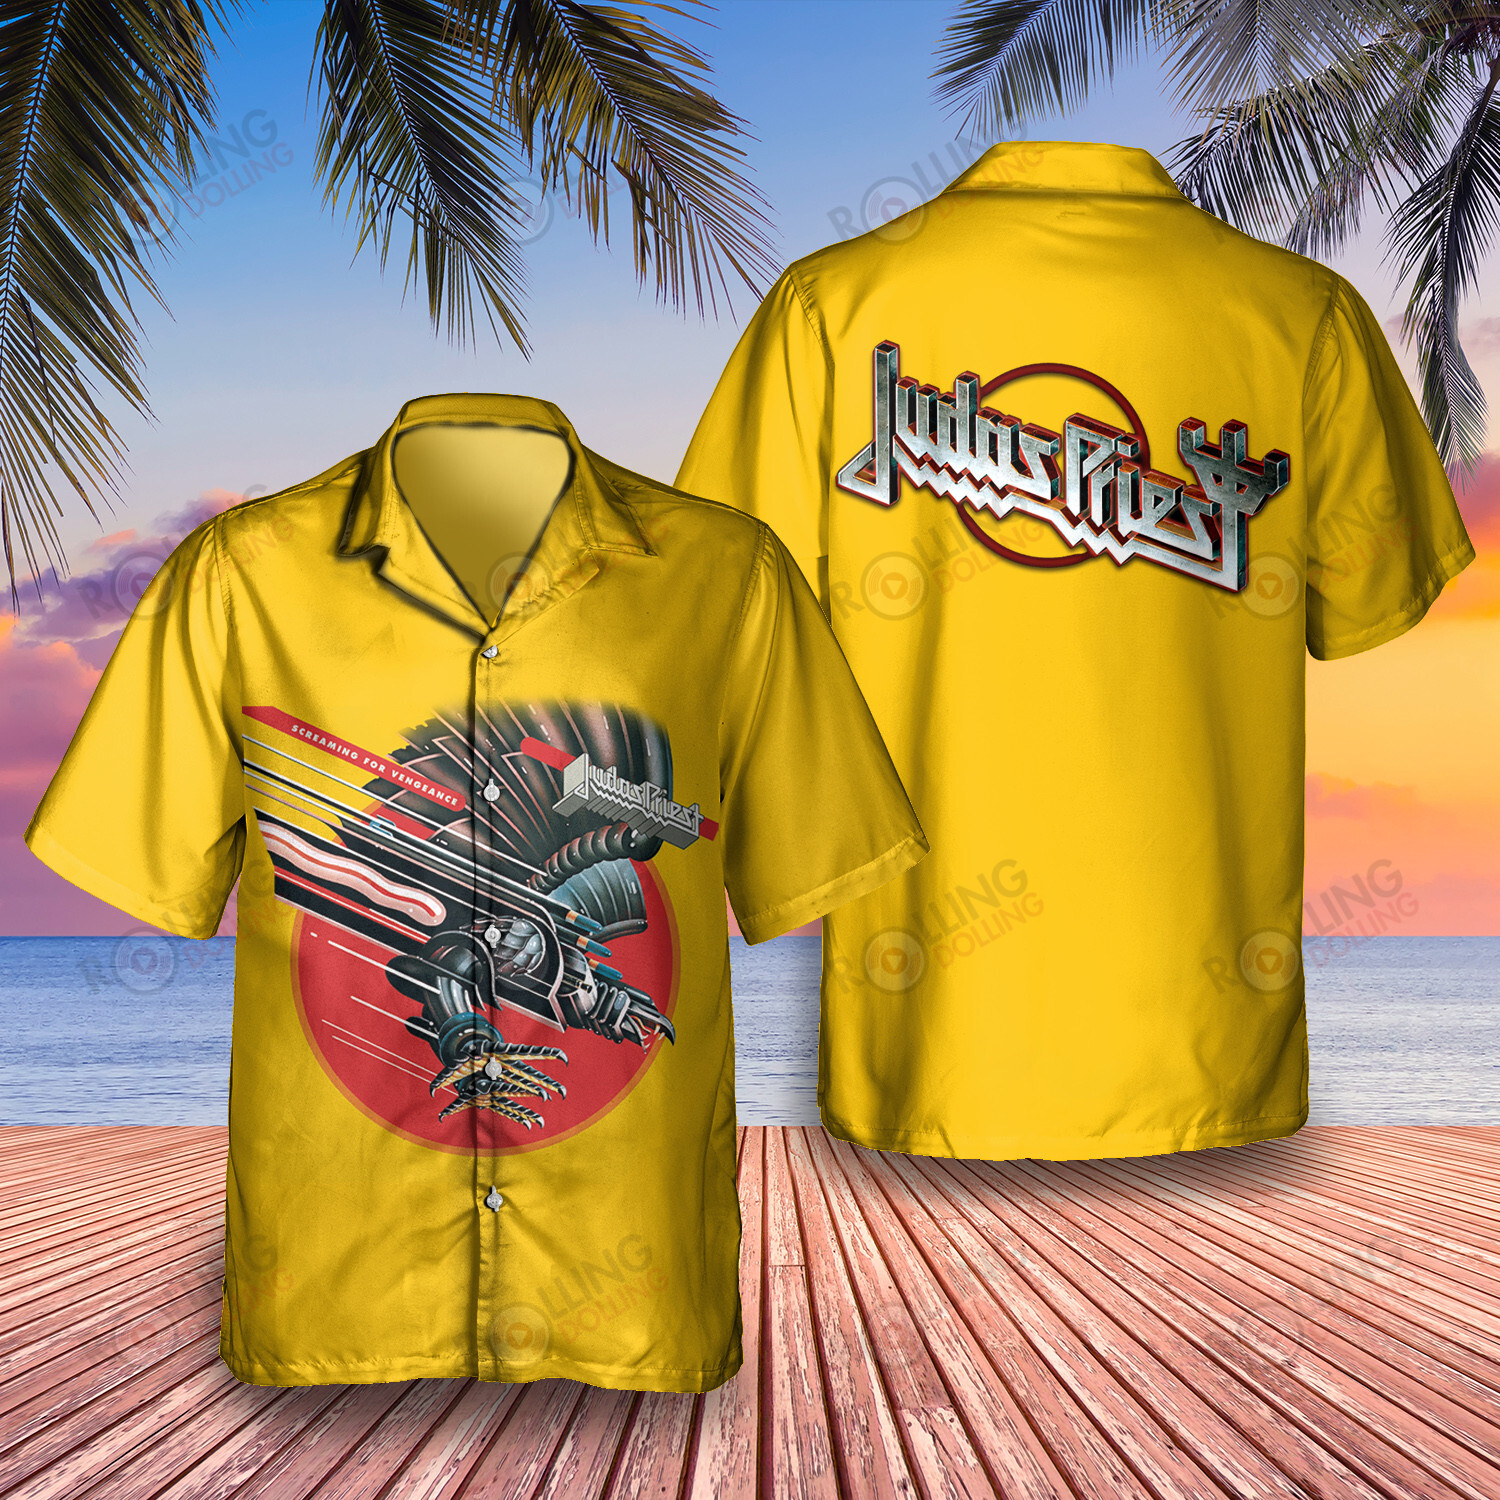 Regardless of their style, you will feel comfortable wearing Hawaiian Shirt 31